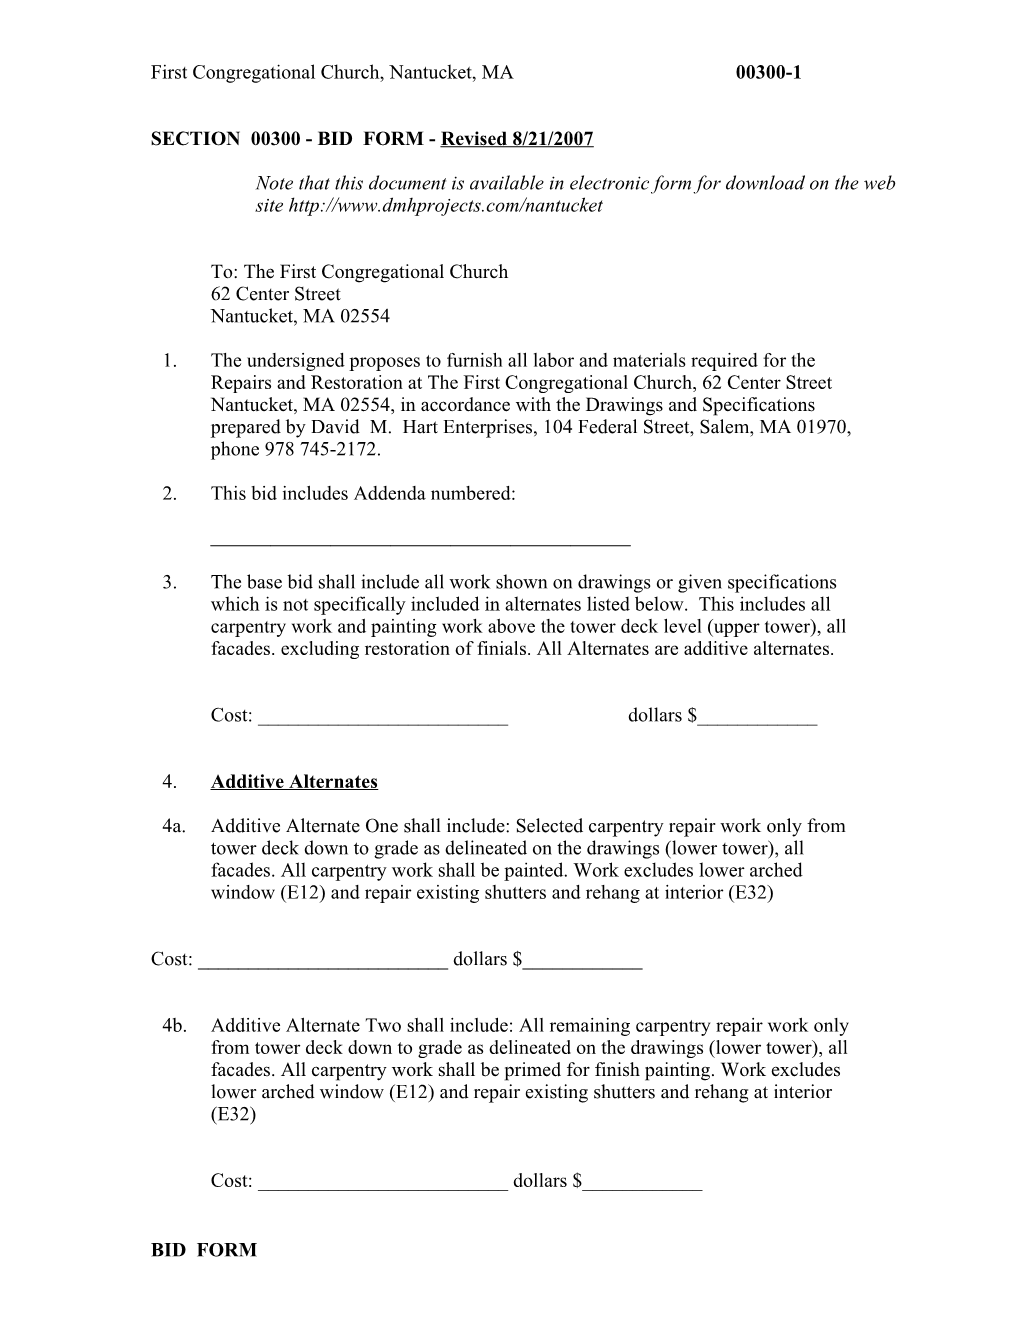 SECTION 00300 - BID FORM - Revised 8/21/2007